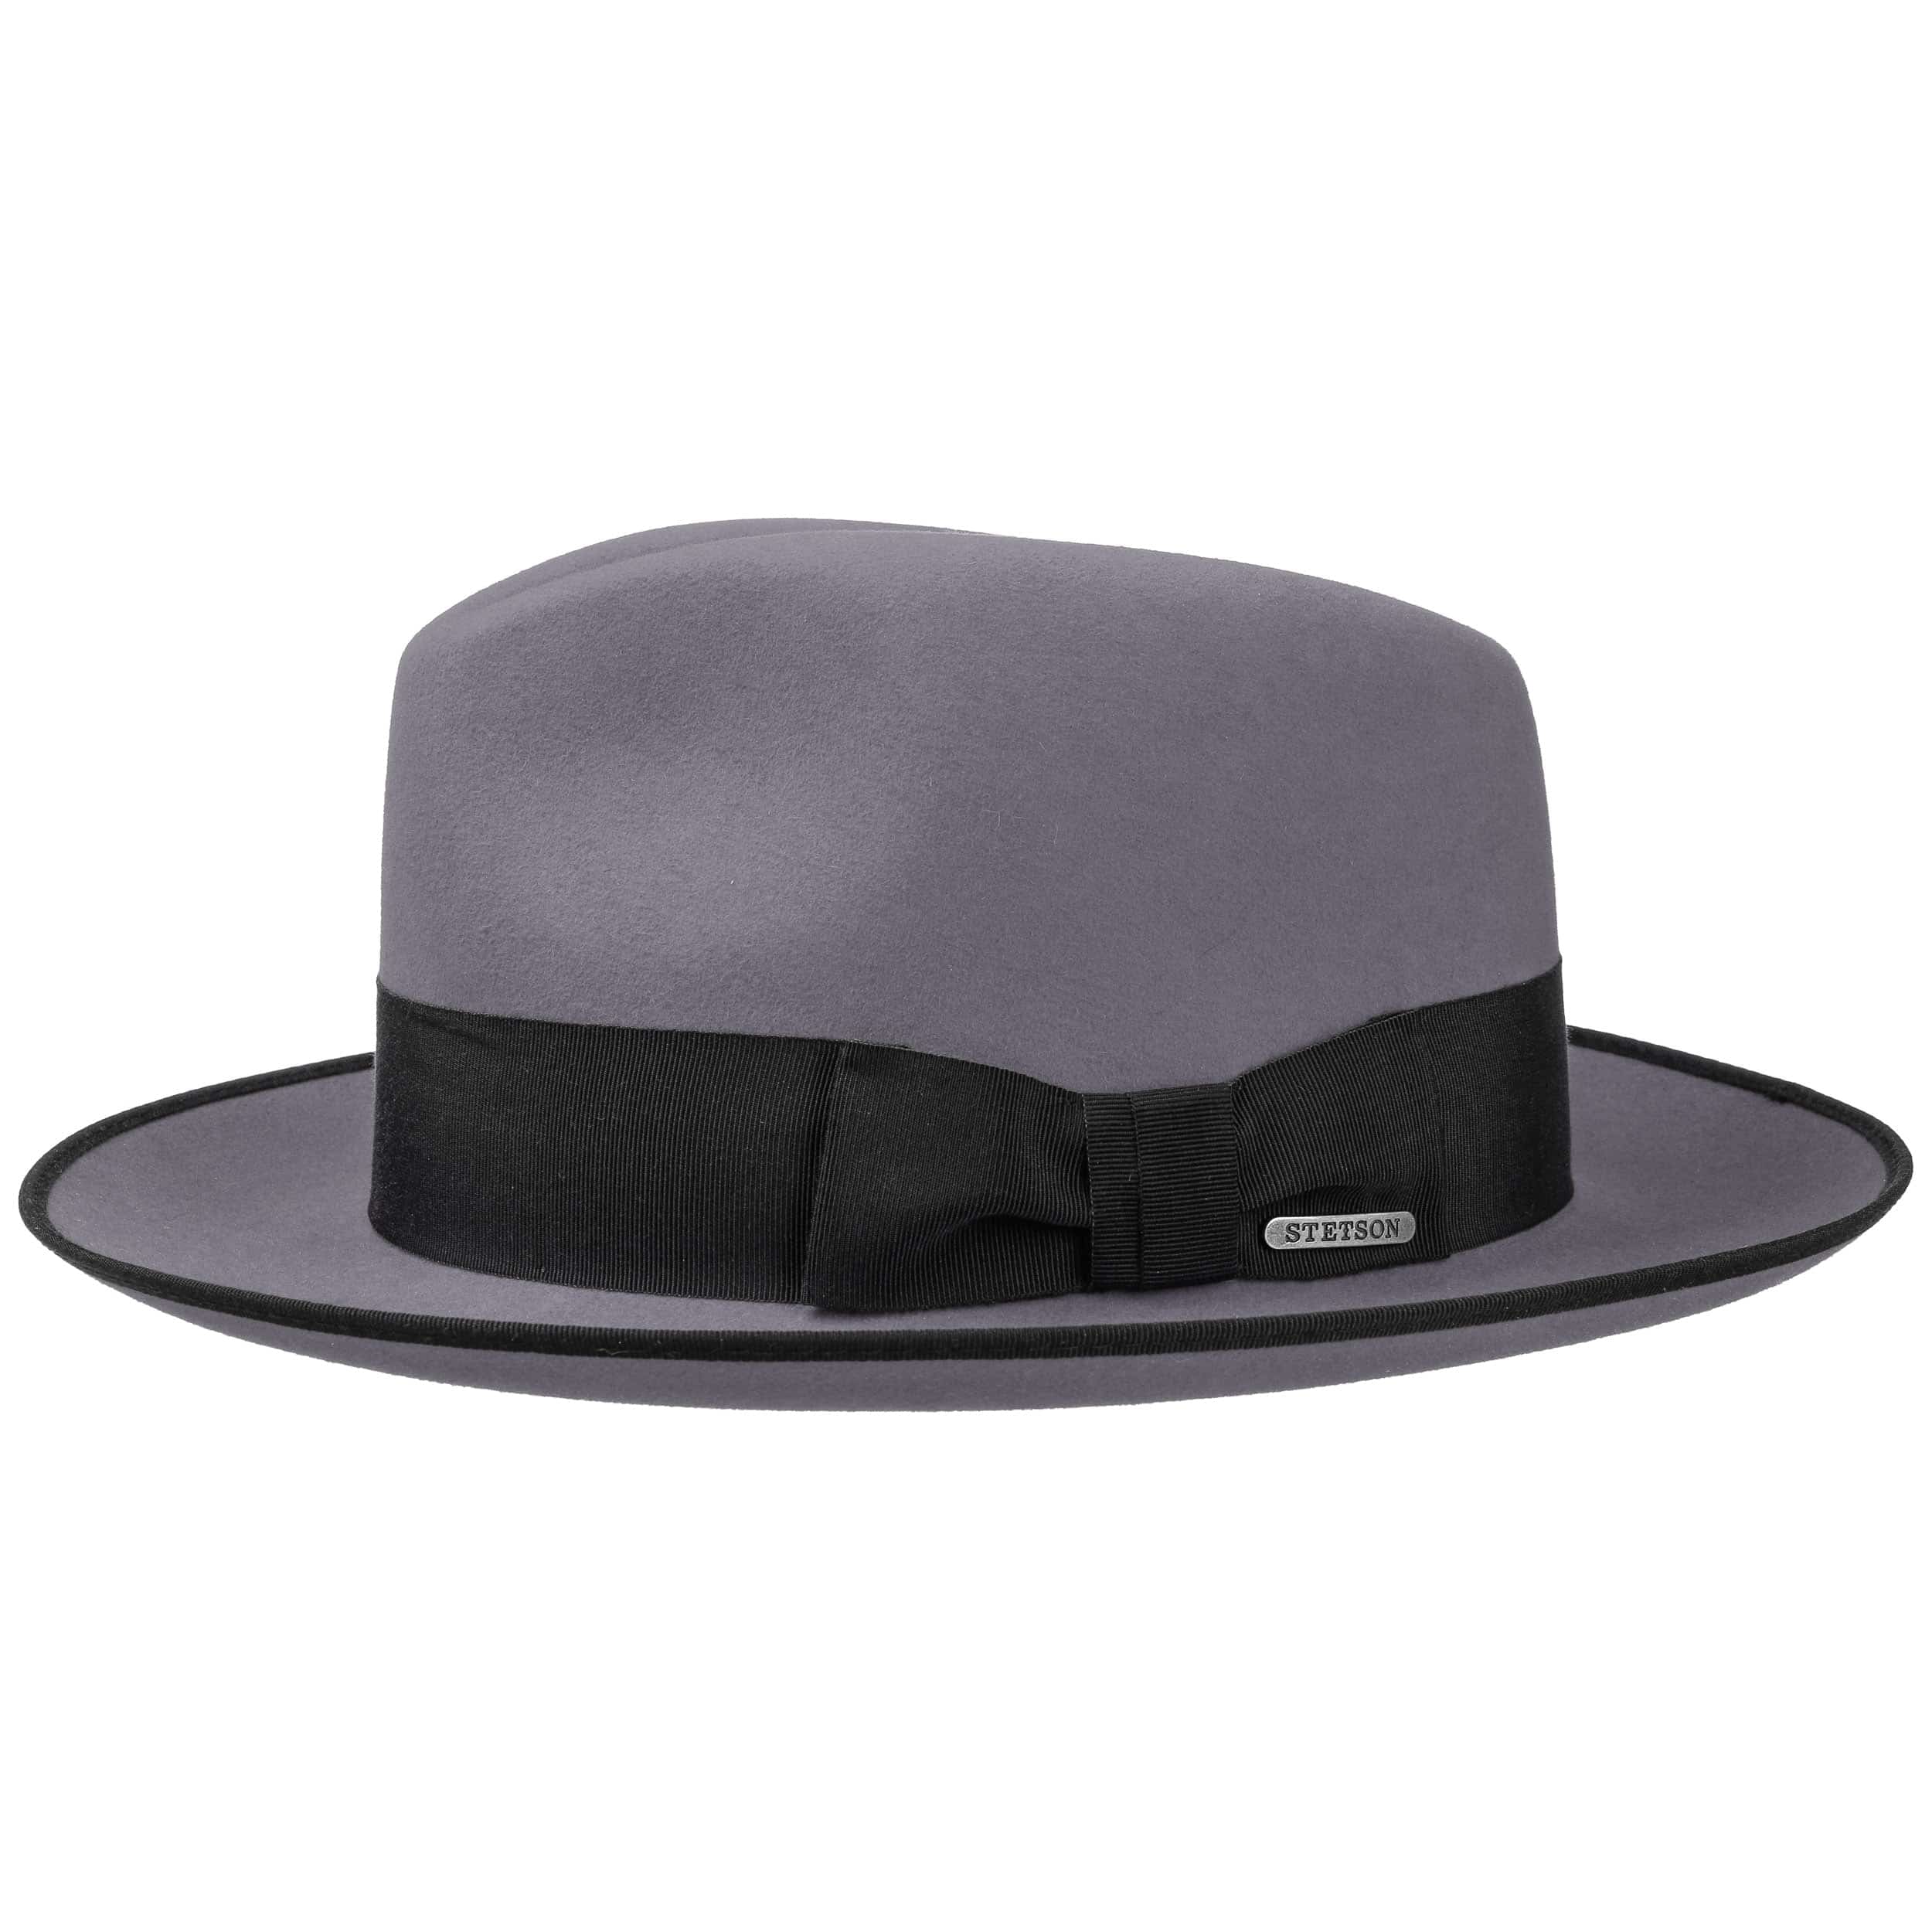 Penn Fedora Fur Felt Hat by Stetson - 145,95 €